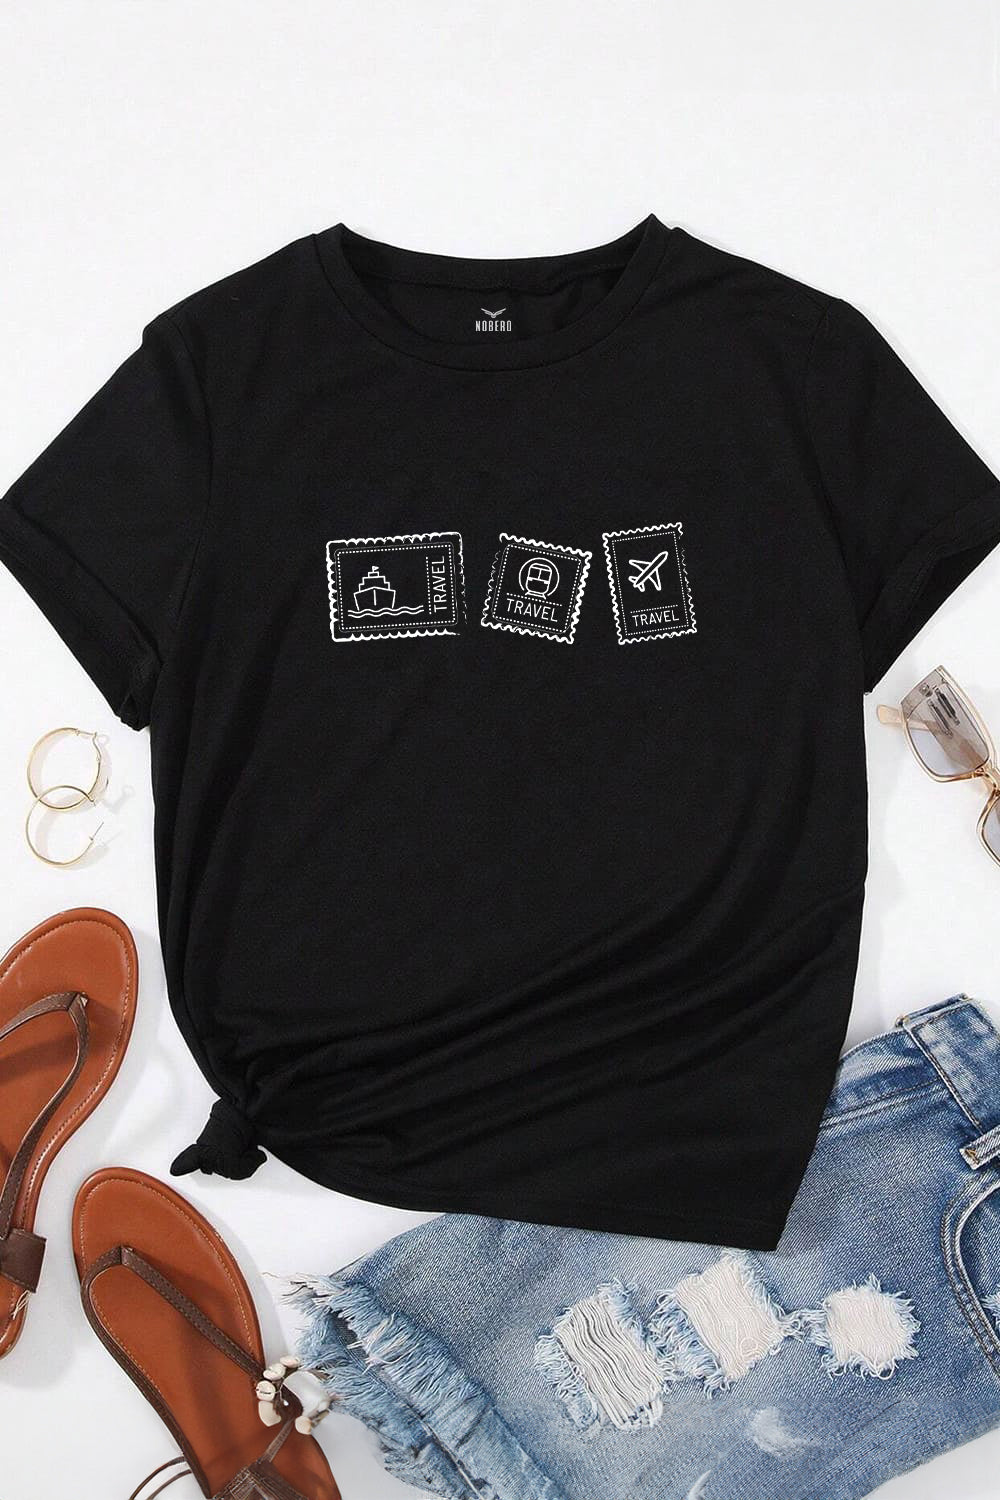 Boyfriend Travel V2 Classic Fit T-Shirt